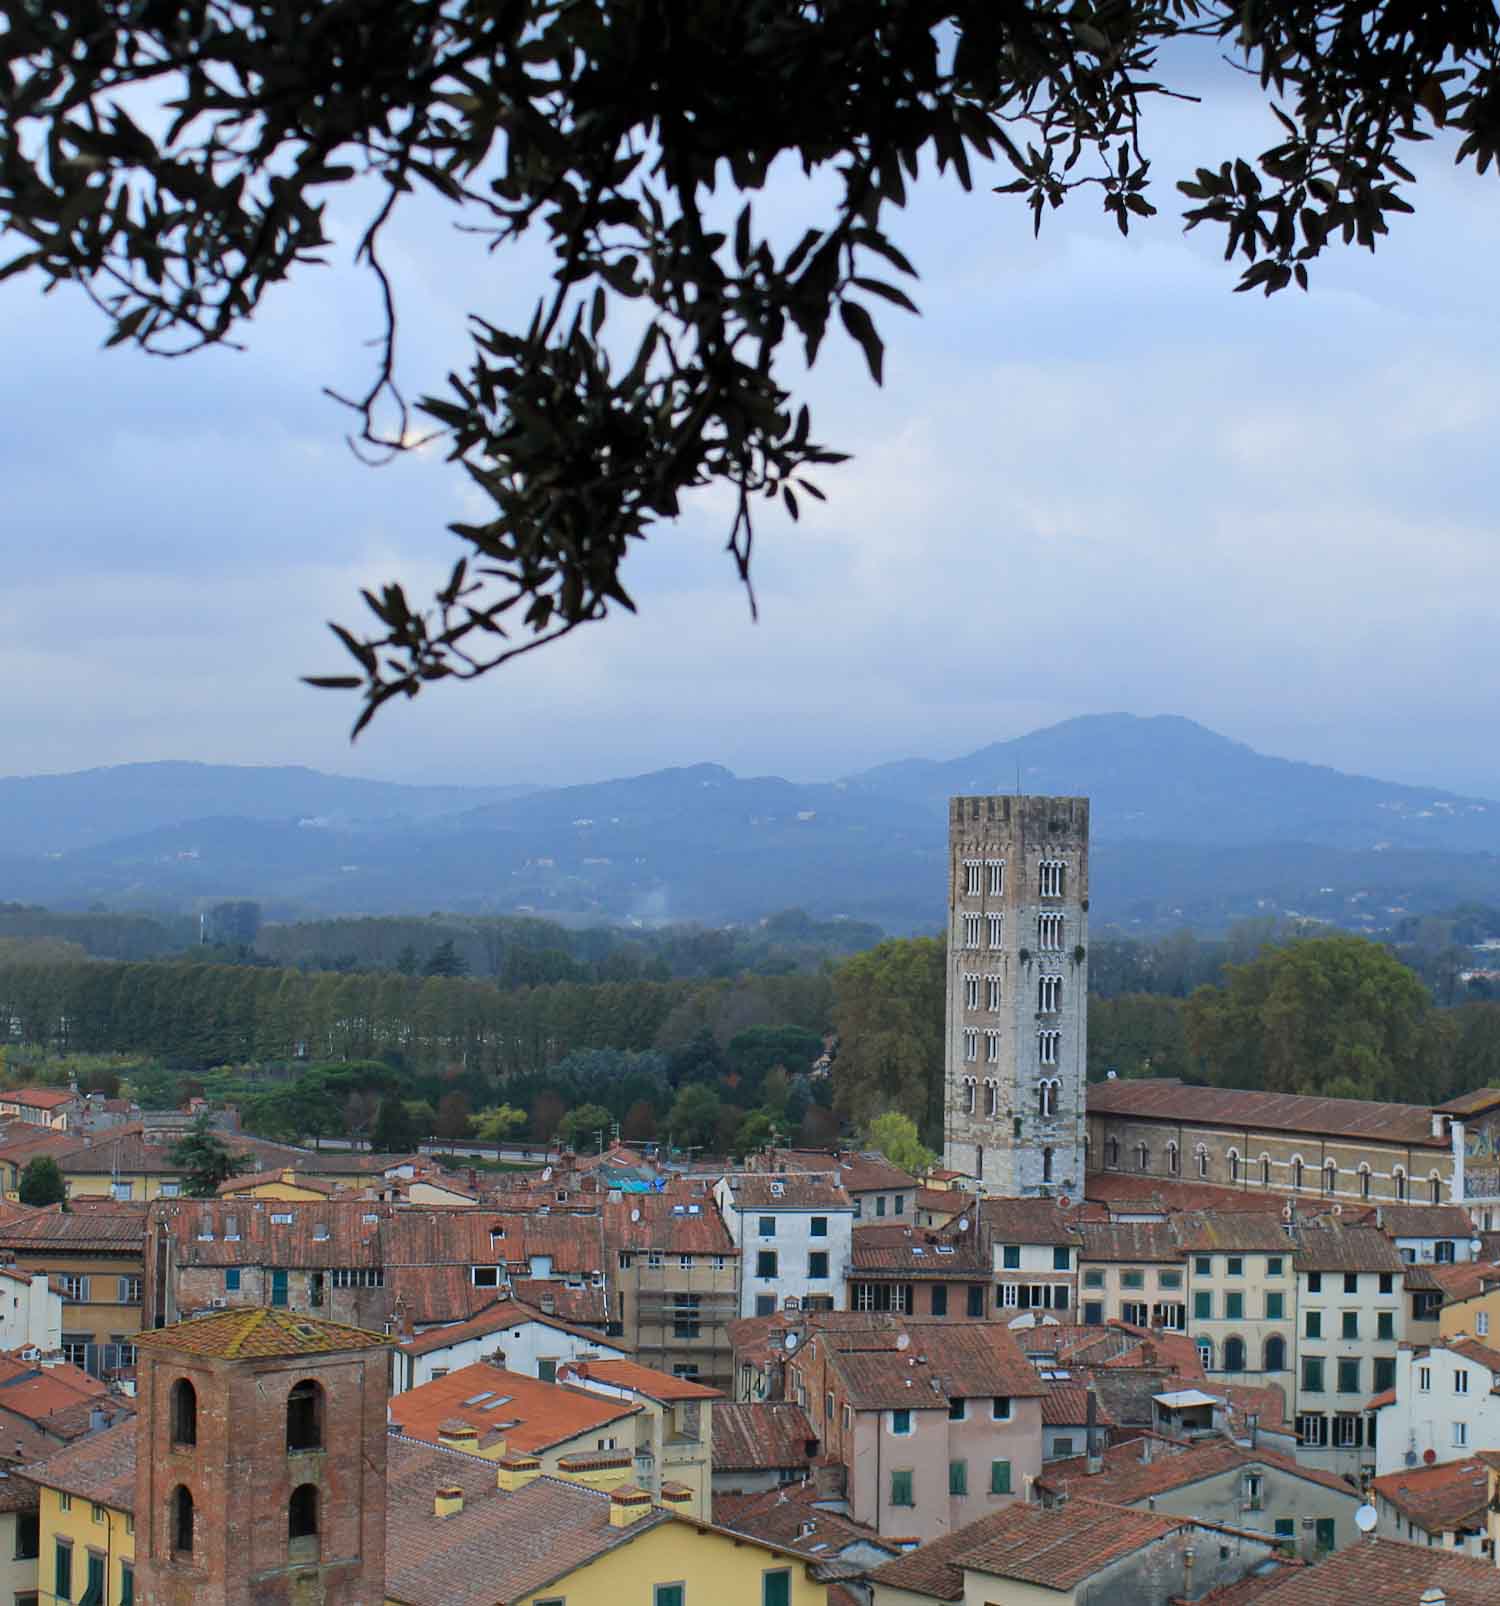 Giunigi Tower in Lucca